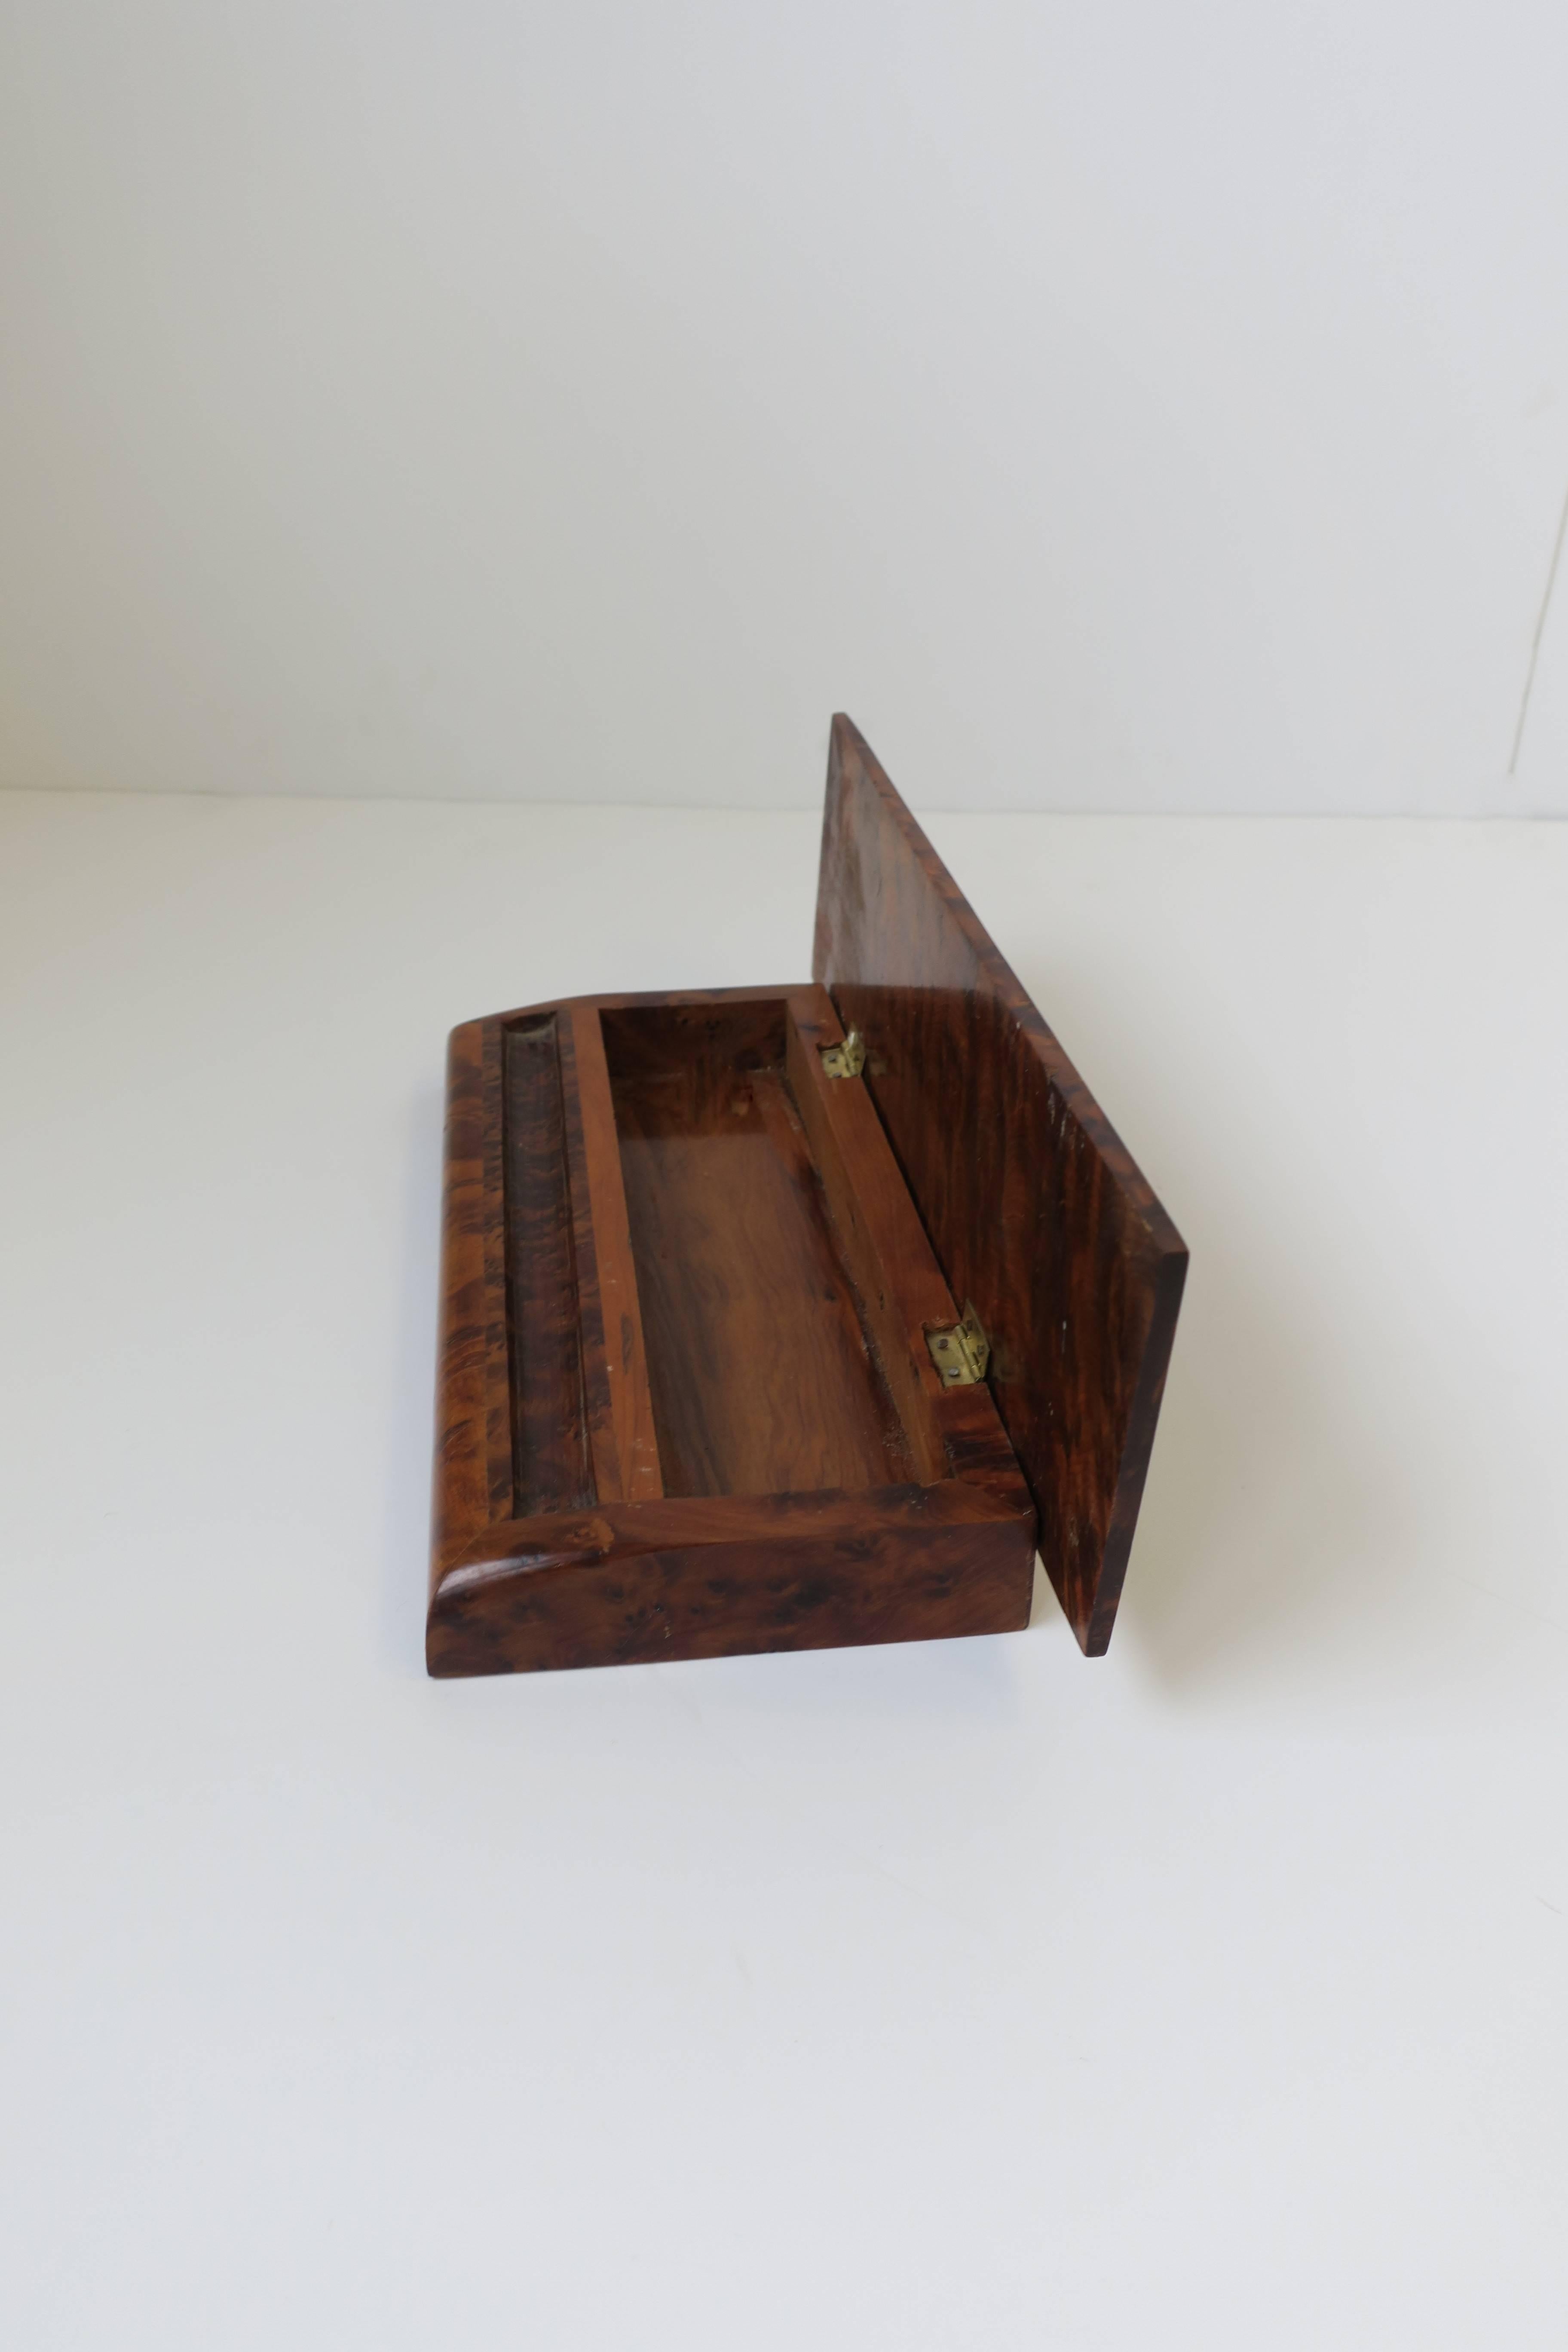 Burl Wood Vanity Jewelry Box or Desk Vessel 3